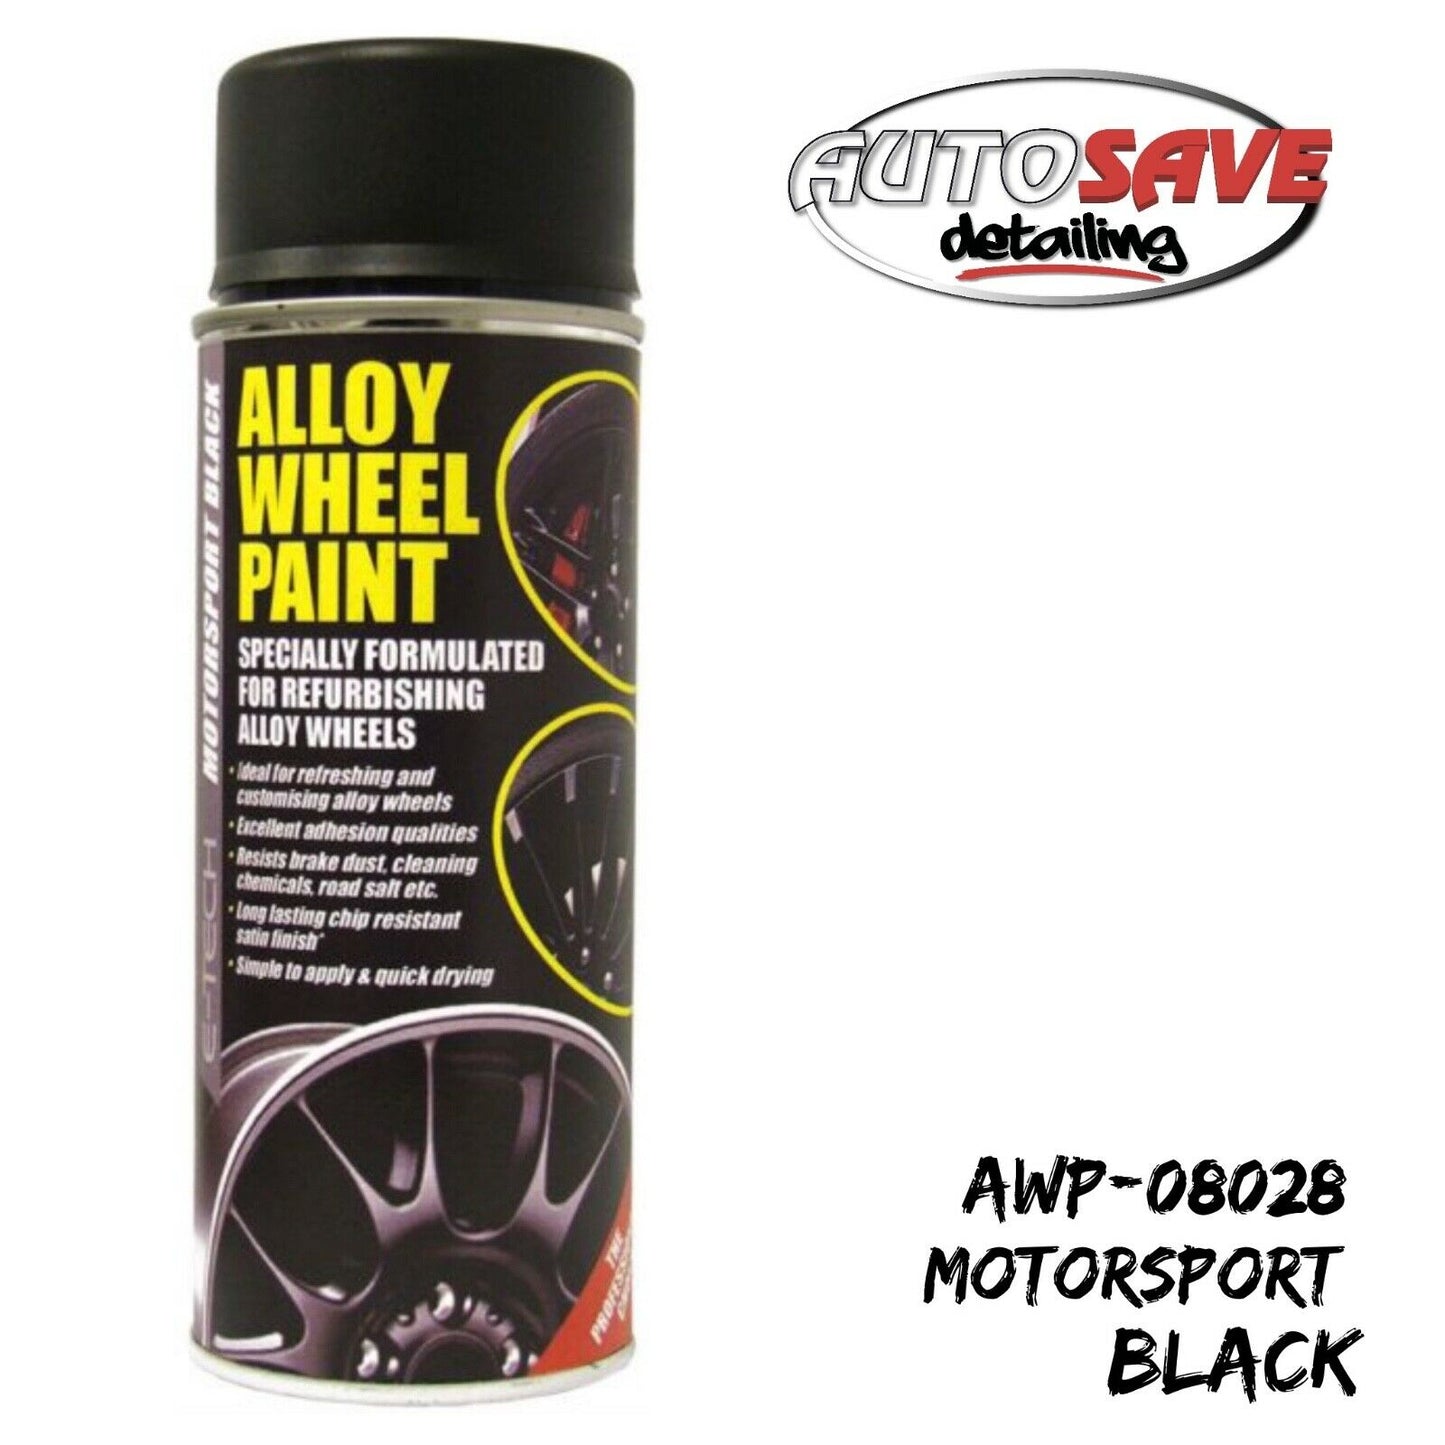 E-Tech Professional Motorsport Black  Car Alloy Wheel Spray Paint